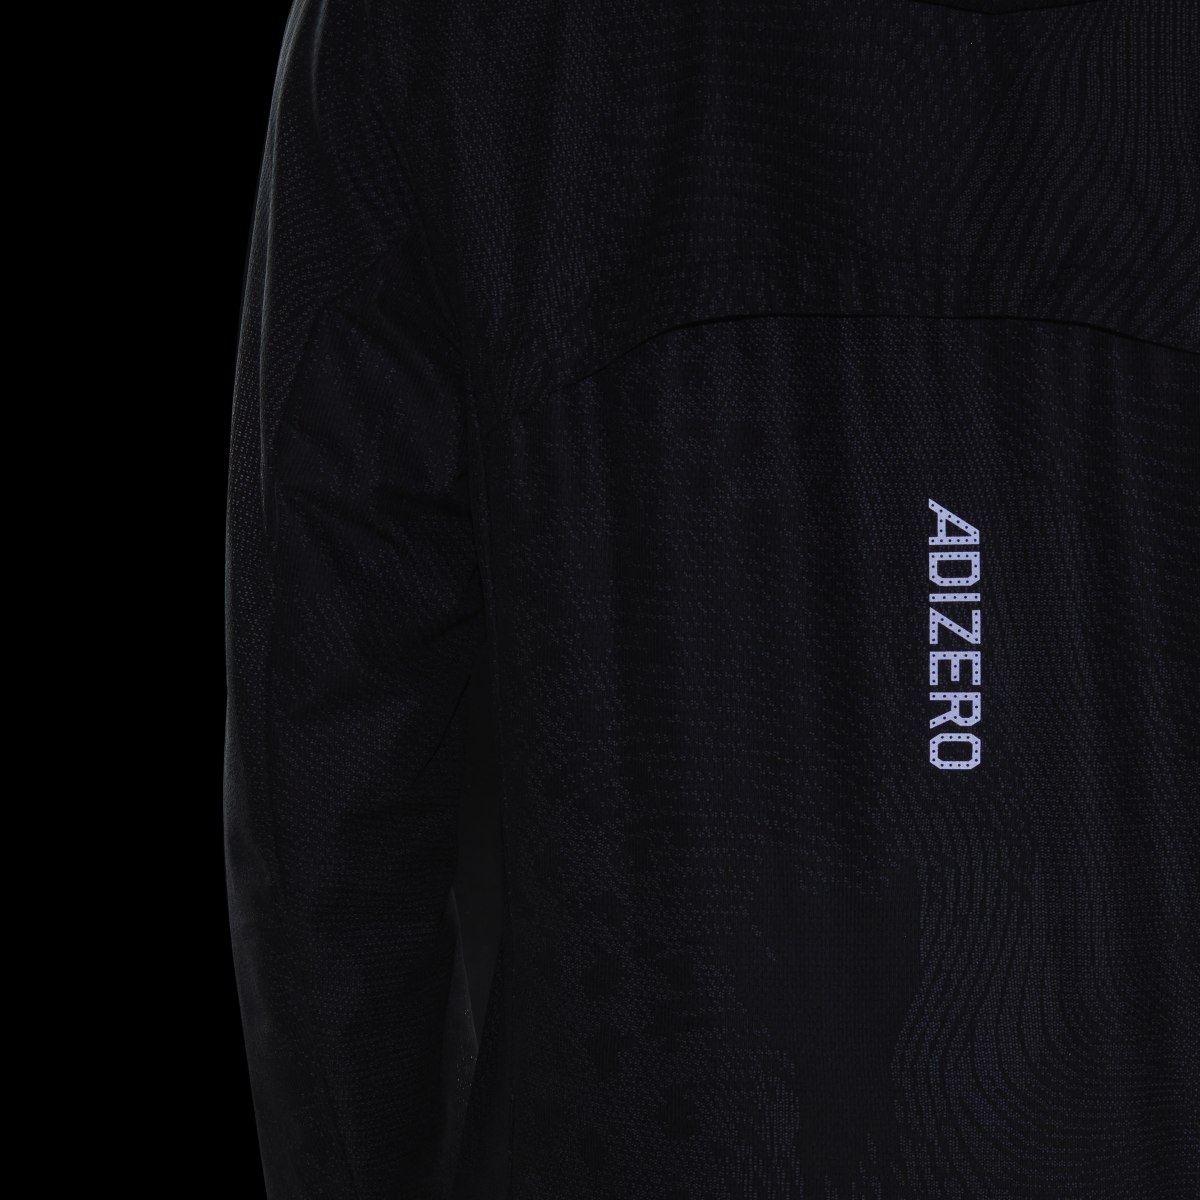 Adidas Adizero Engineered Membrane Jacket. 7